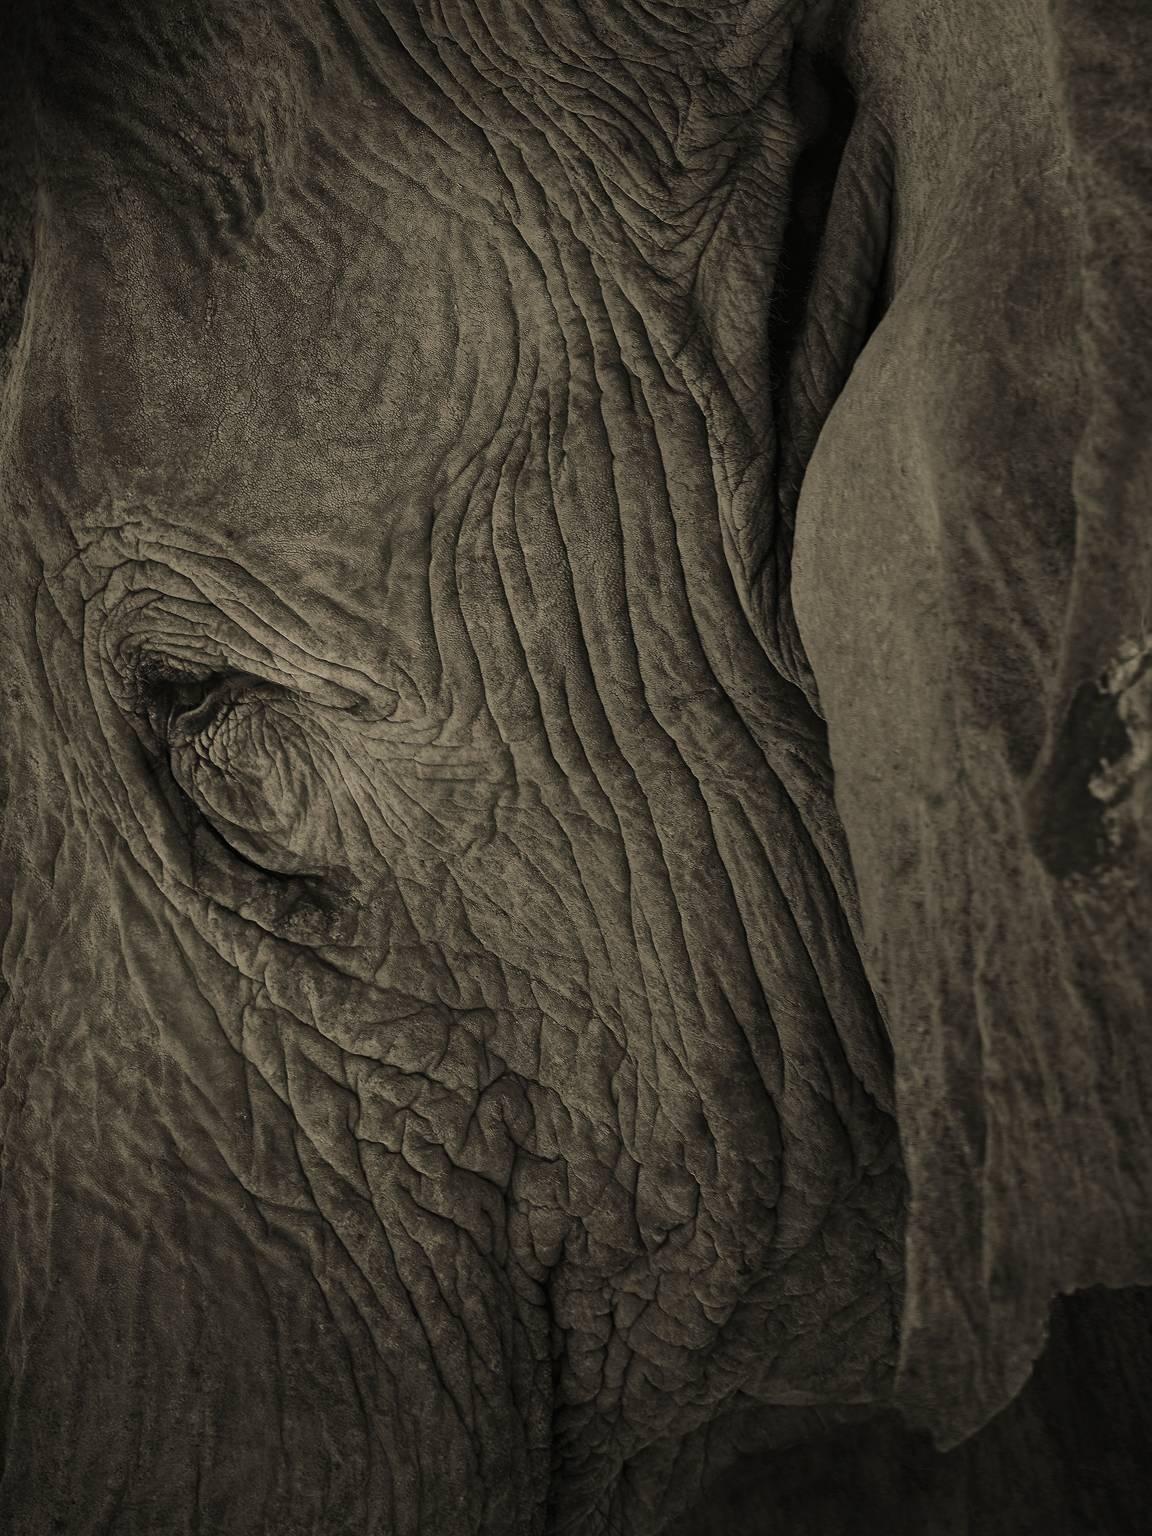 Chris Gordaneer Black and White Photograph - Elephant 03